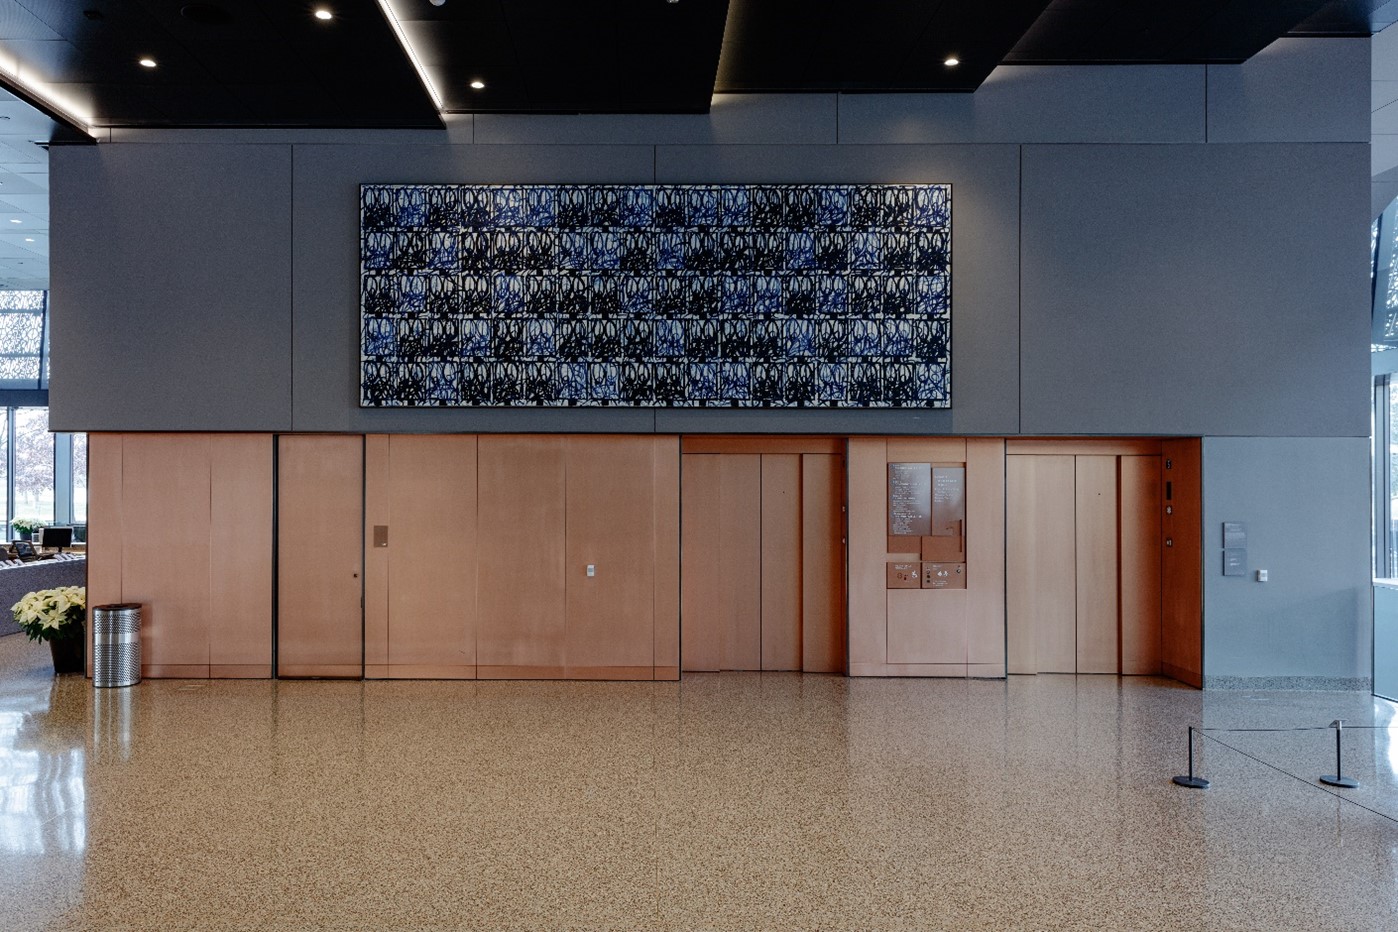 Black and blue patterned painting hangs above doorways and elevators in museum lobby.